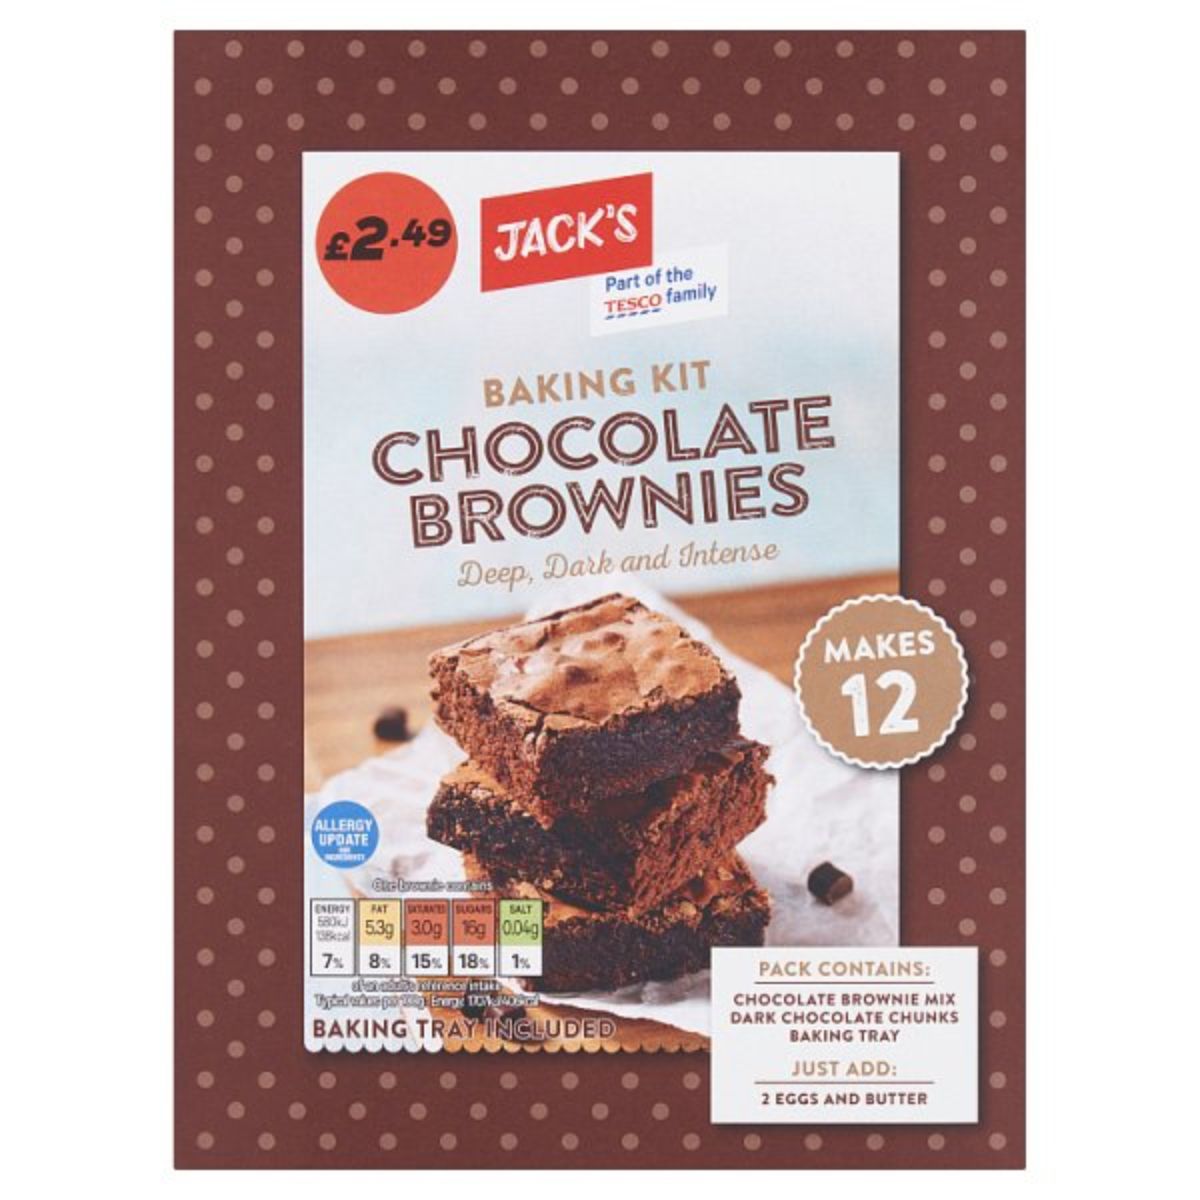 A box of Jack's - Baking Kit Chocolate Brownies - 285g.